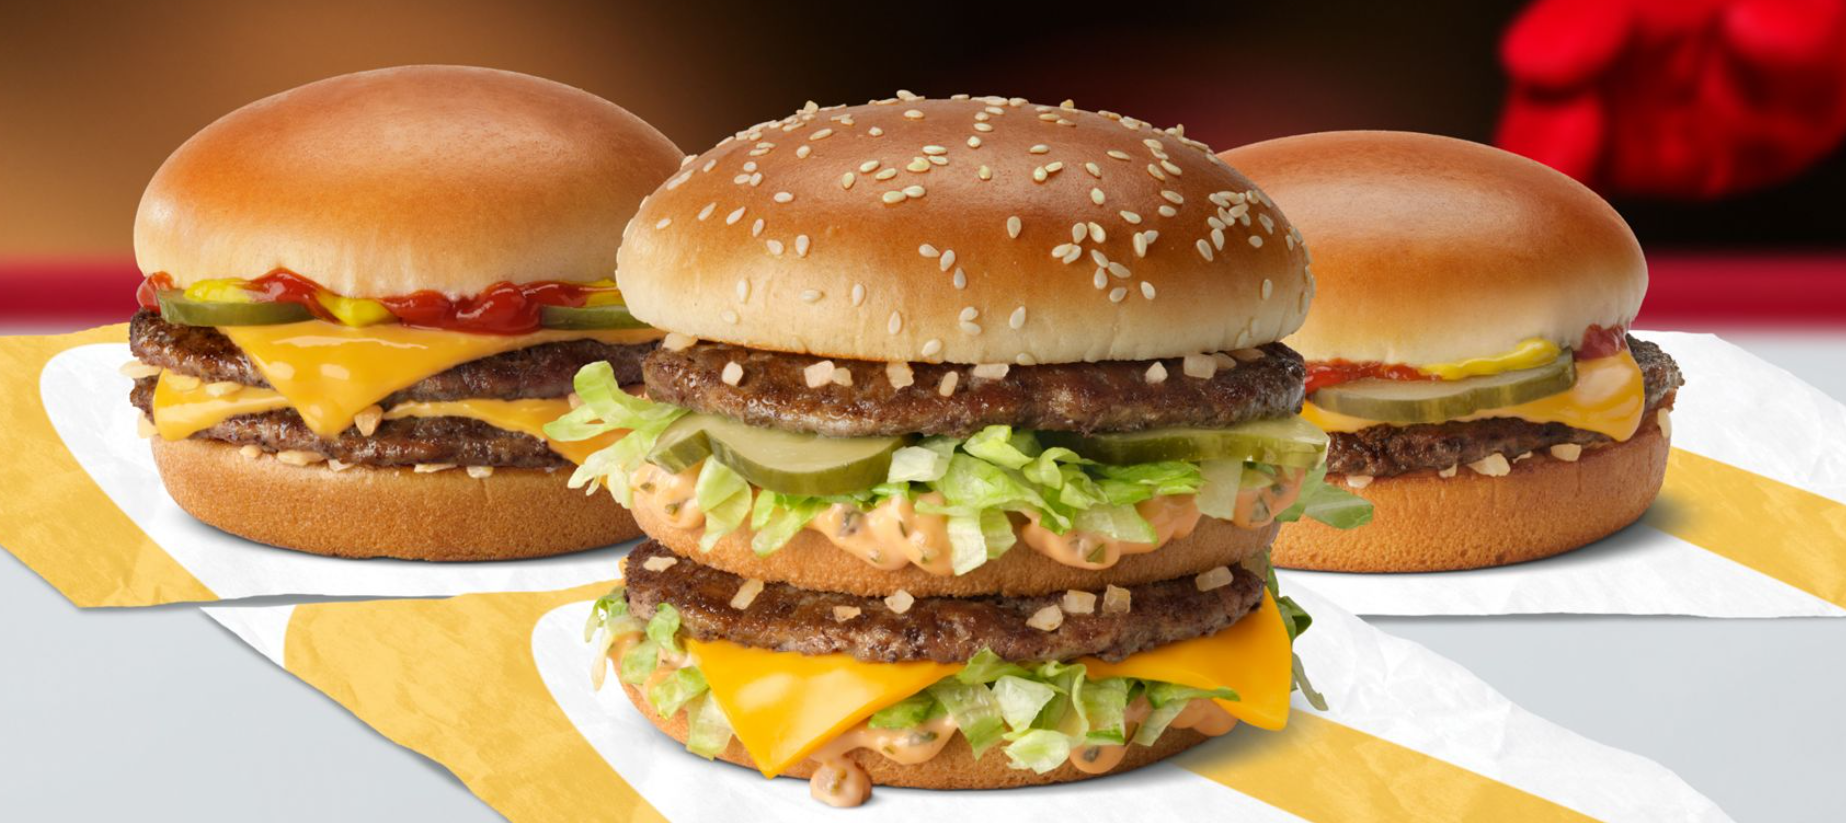 McDonald's Dinner Burgers